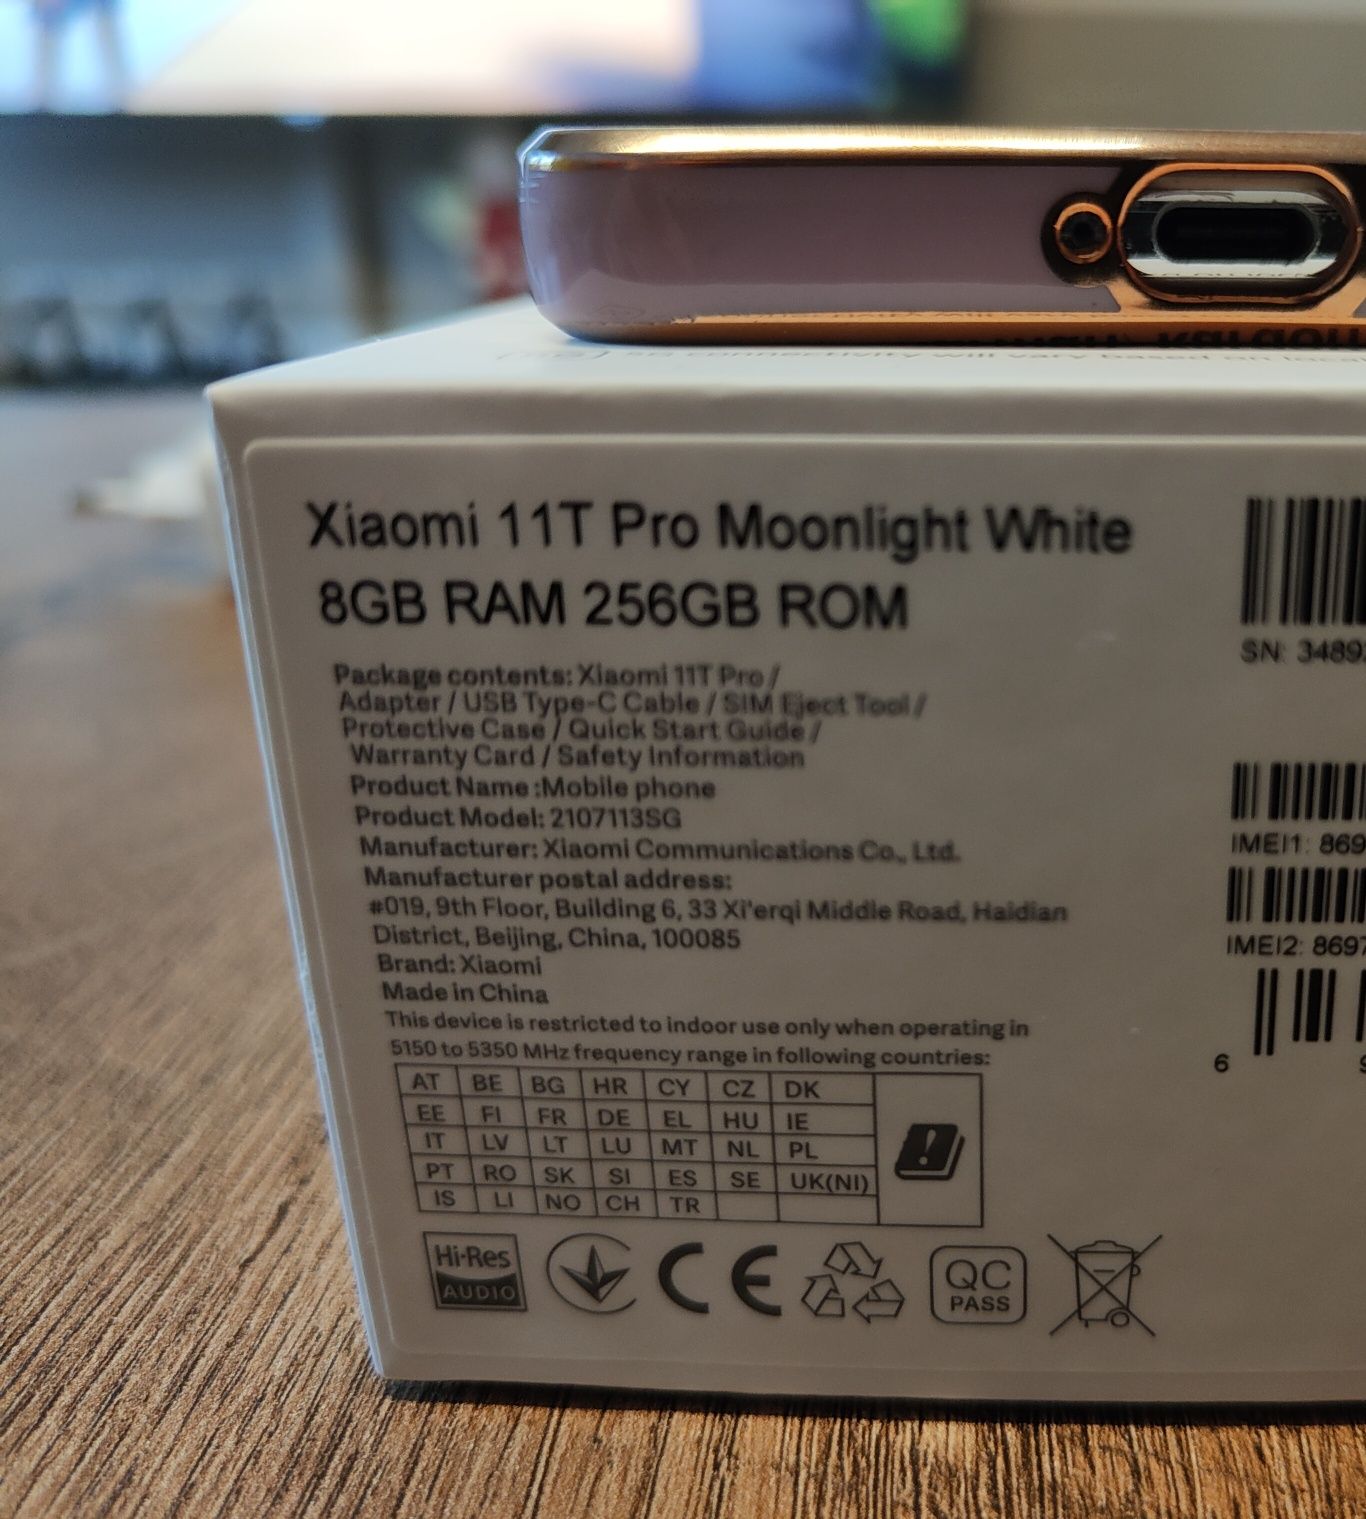 Xiaomi 11T Pro Moonlight White 8GB RAM 256GB ROM